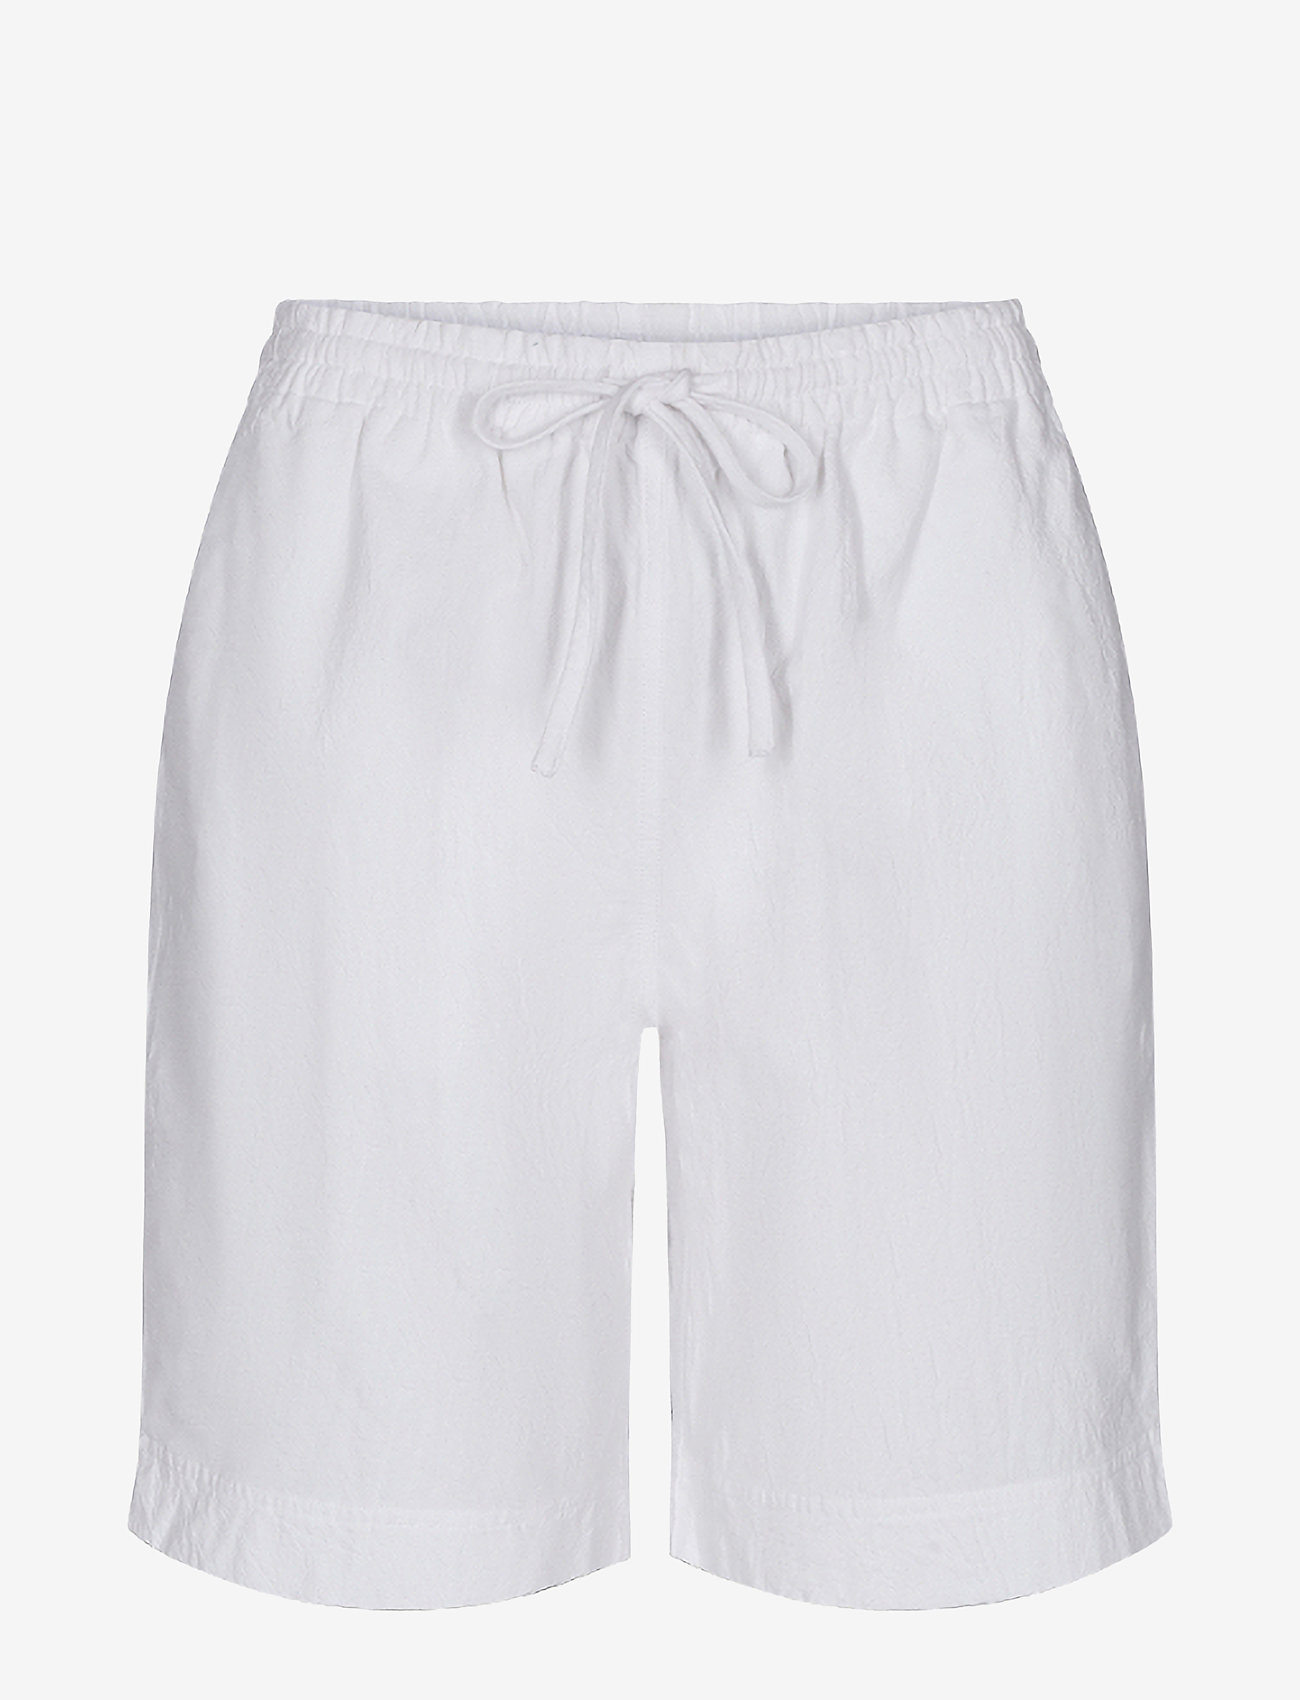 Soyaconcept - SC-CISSIE - casual shorts - white - 1